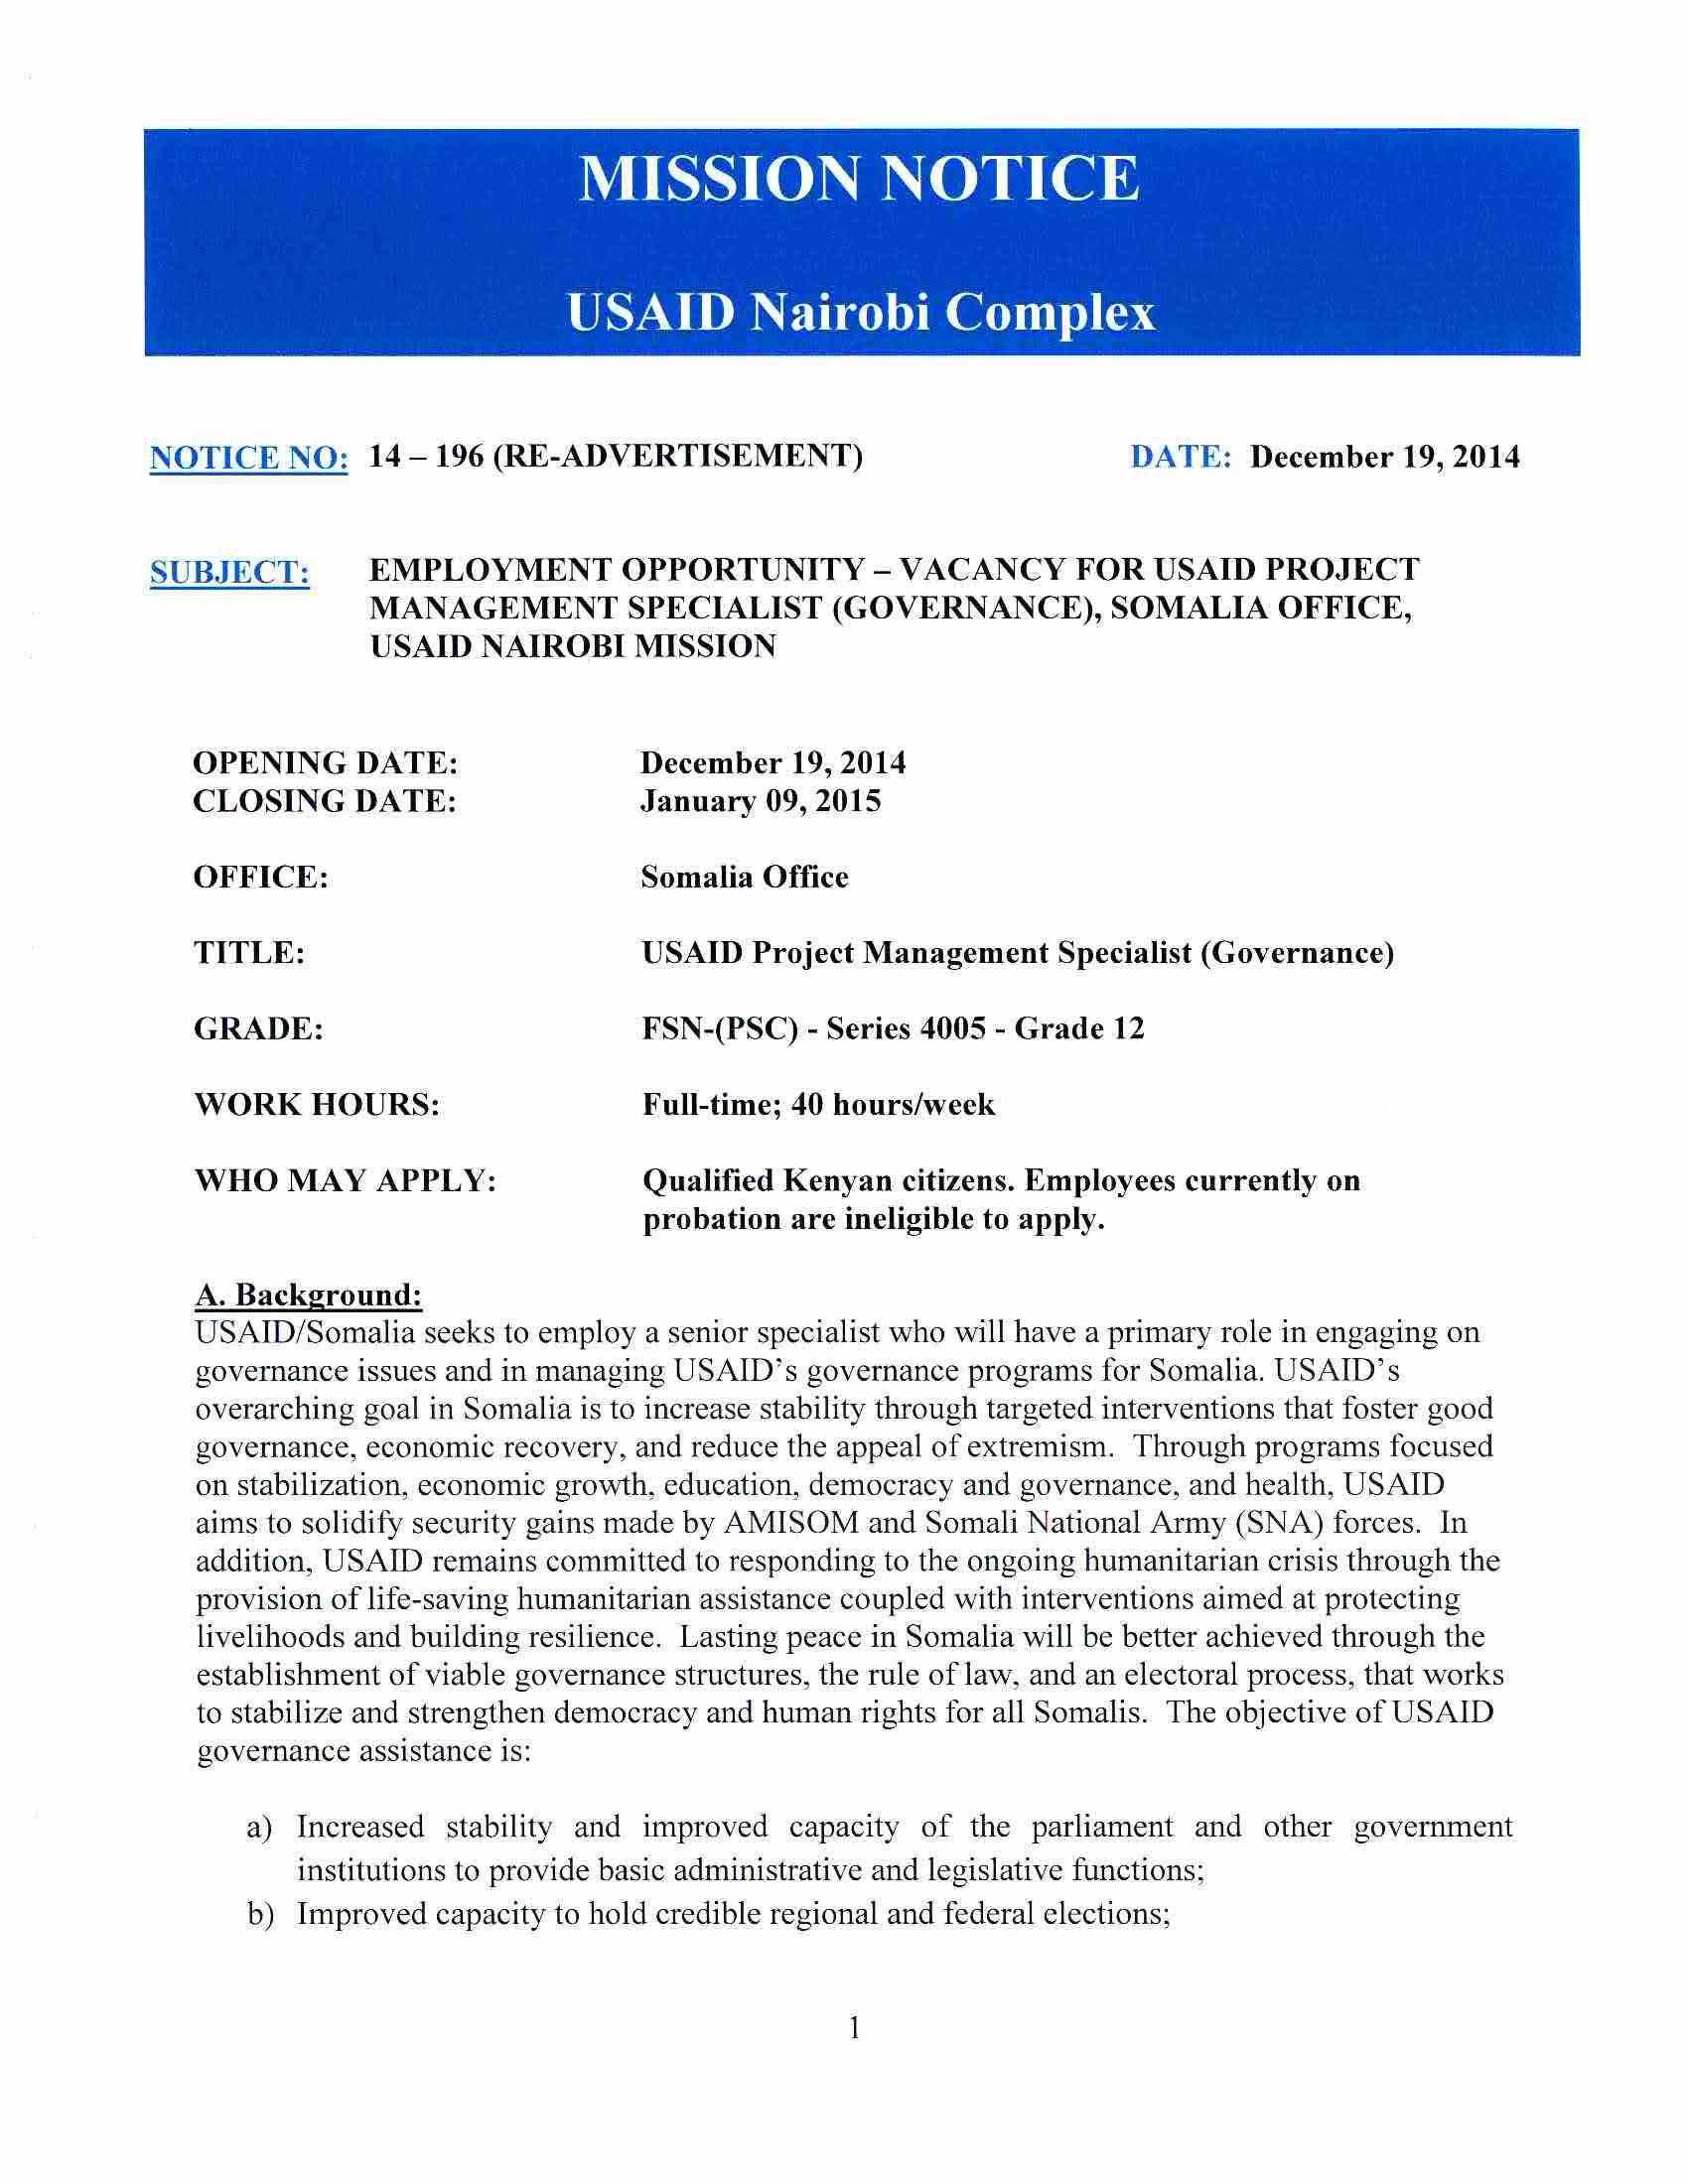 USAID Nairobi Complex Mission Notice 14 - 196